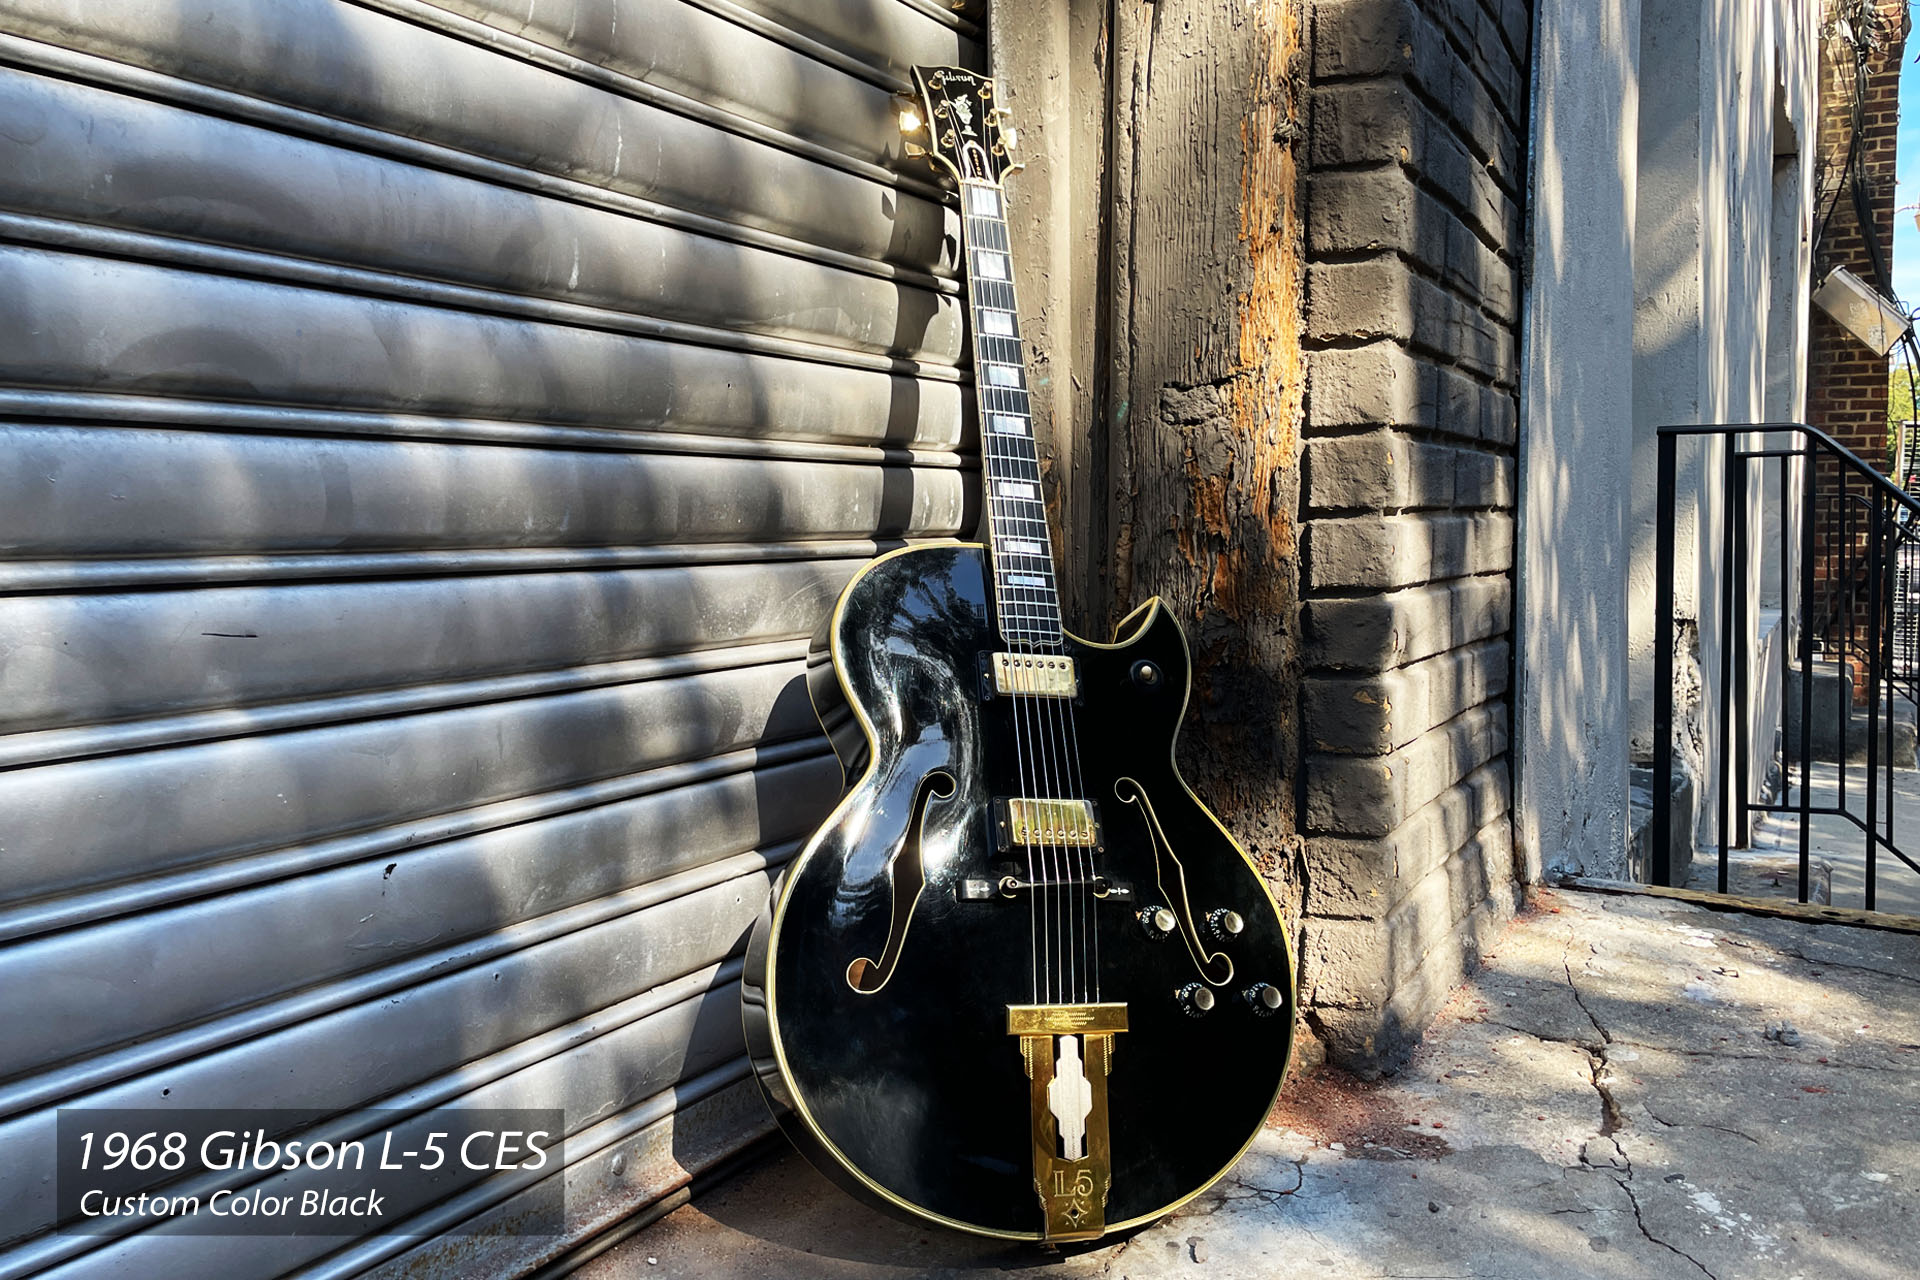 1968 Gibson L-5 CES